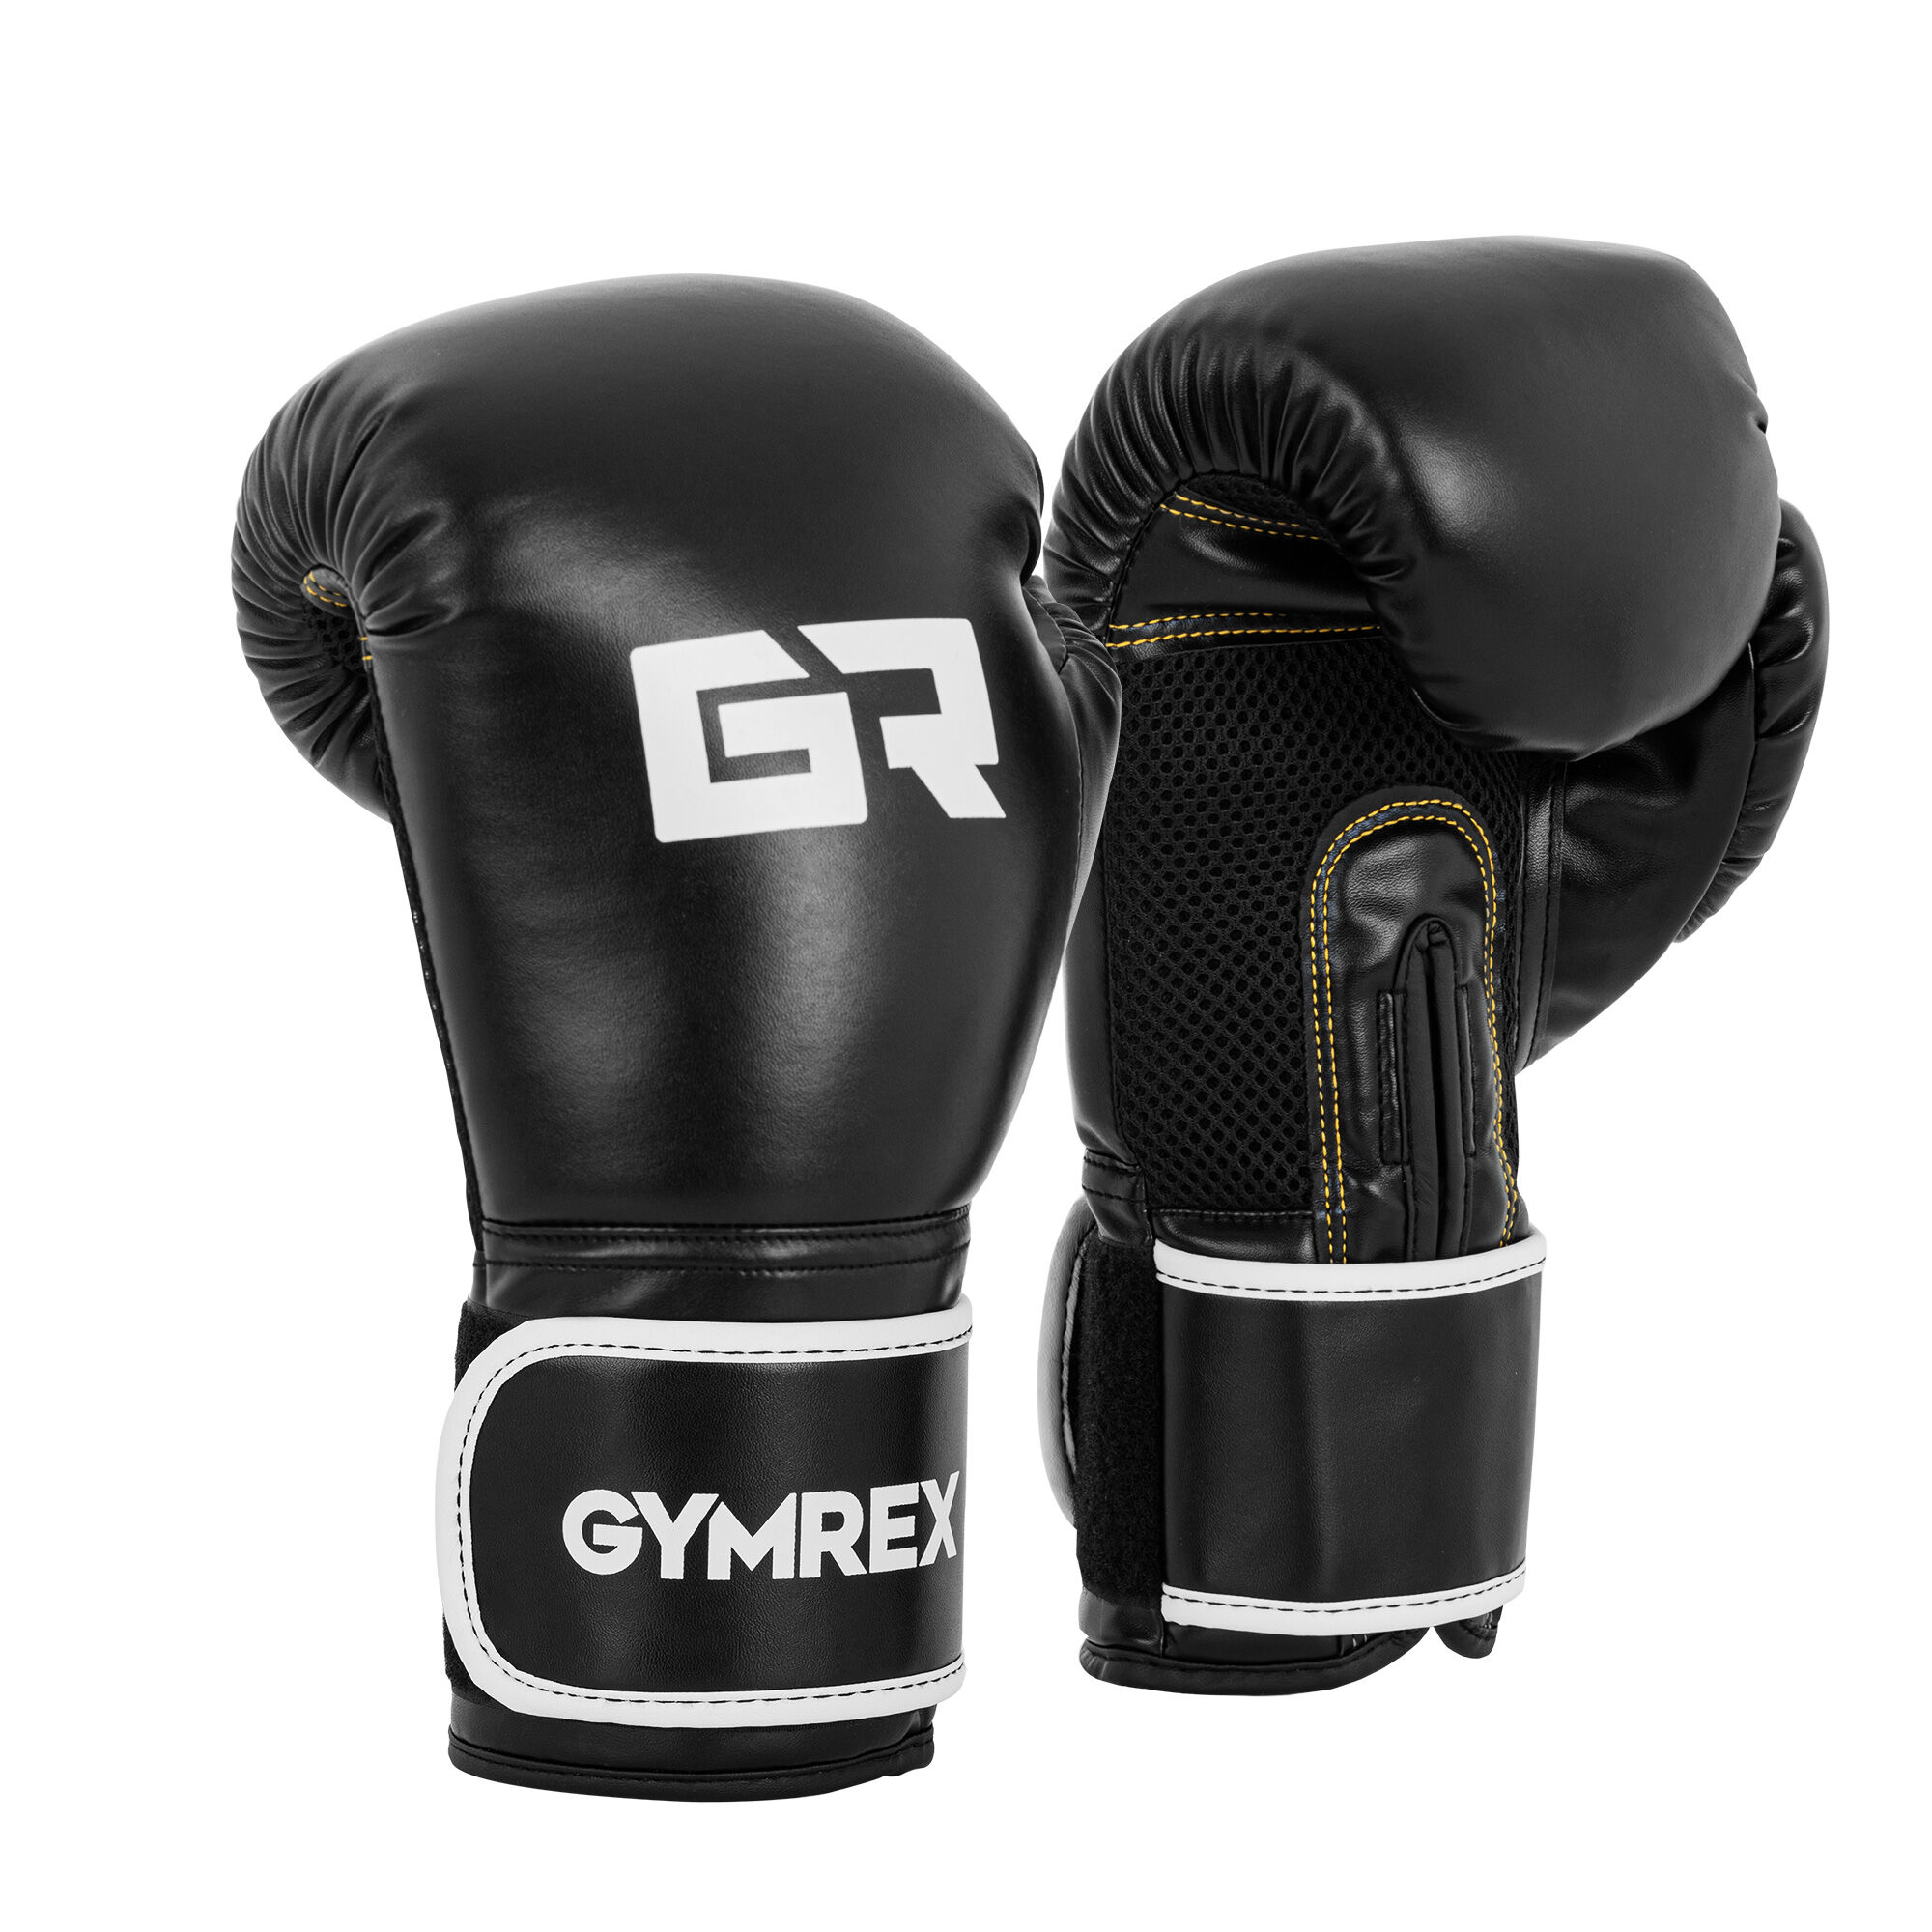 Gymrex Boxing Gloves - 16 oz - interior mesh - black GR-BG 16B